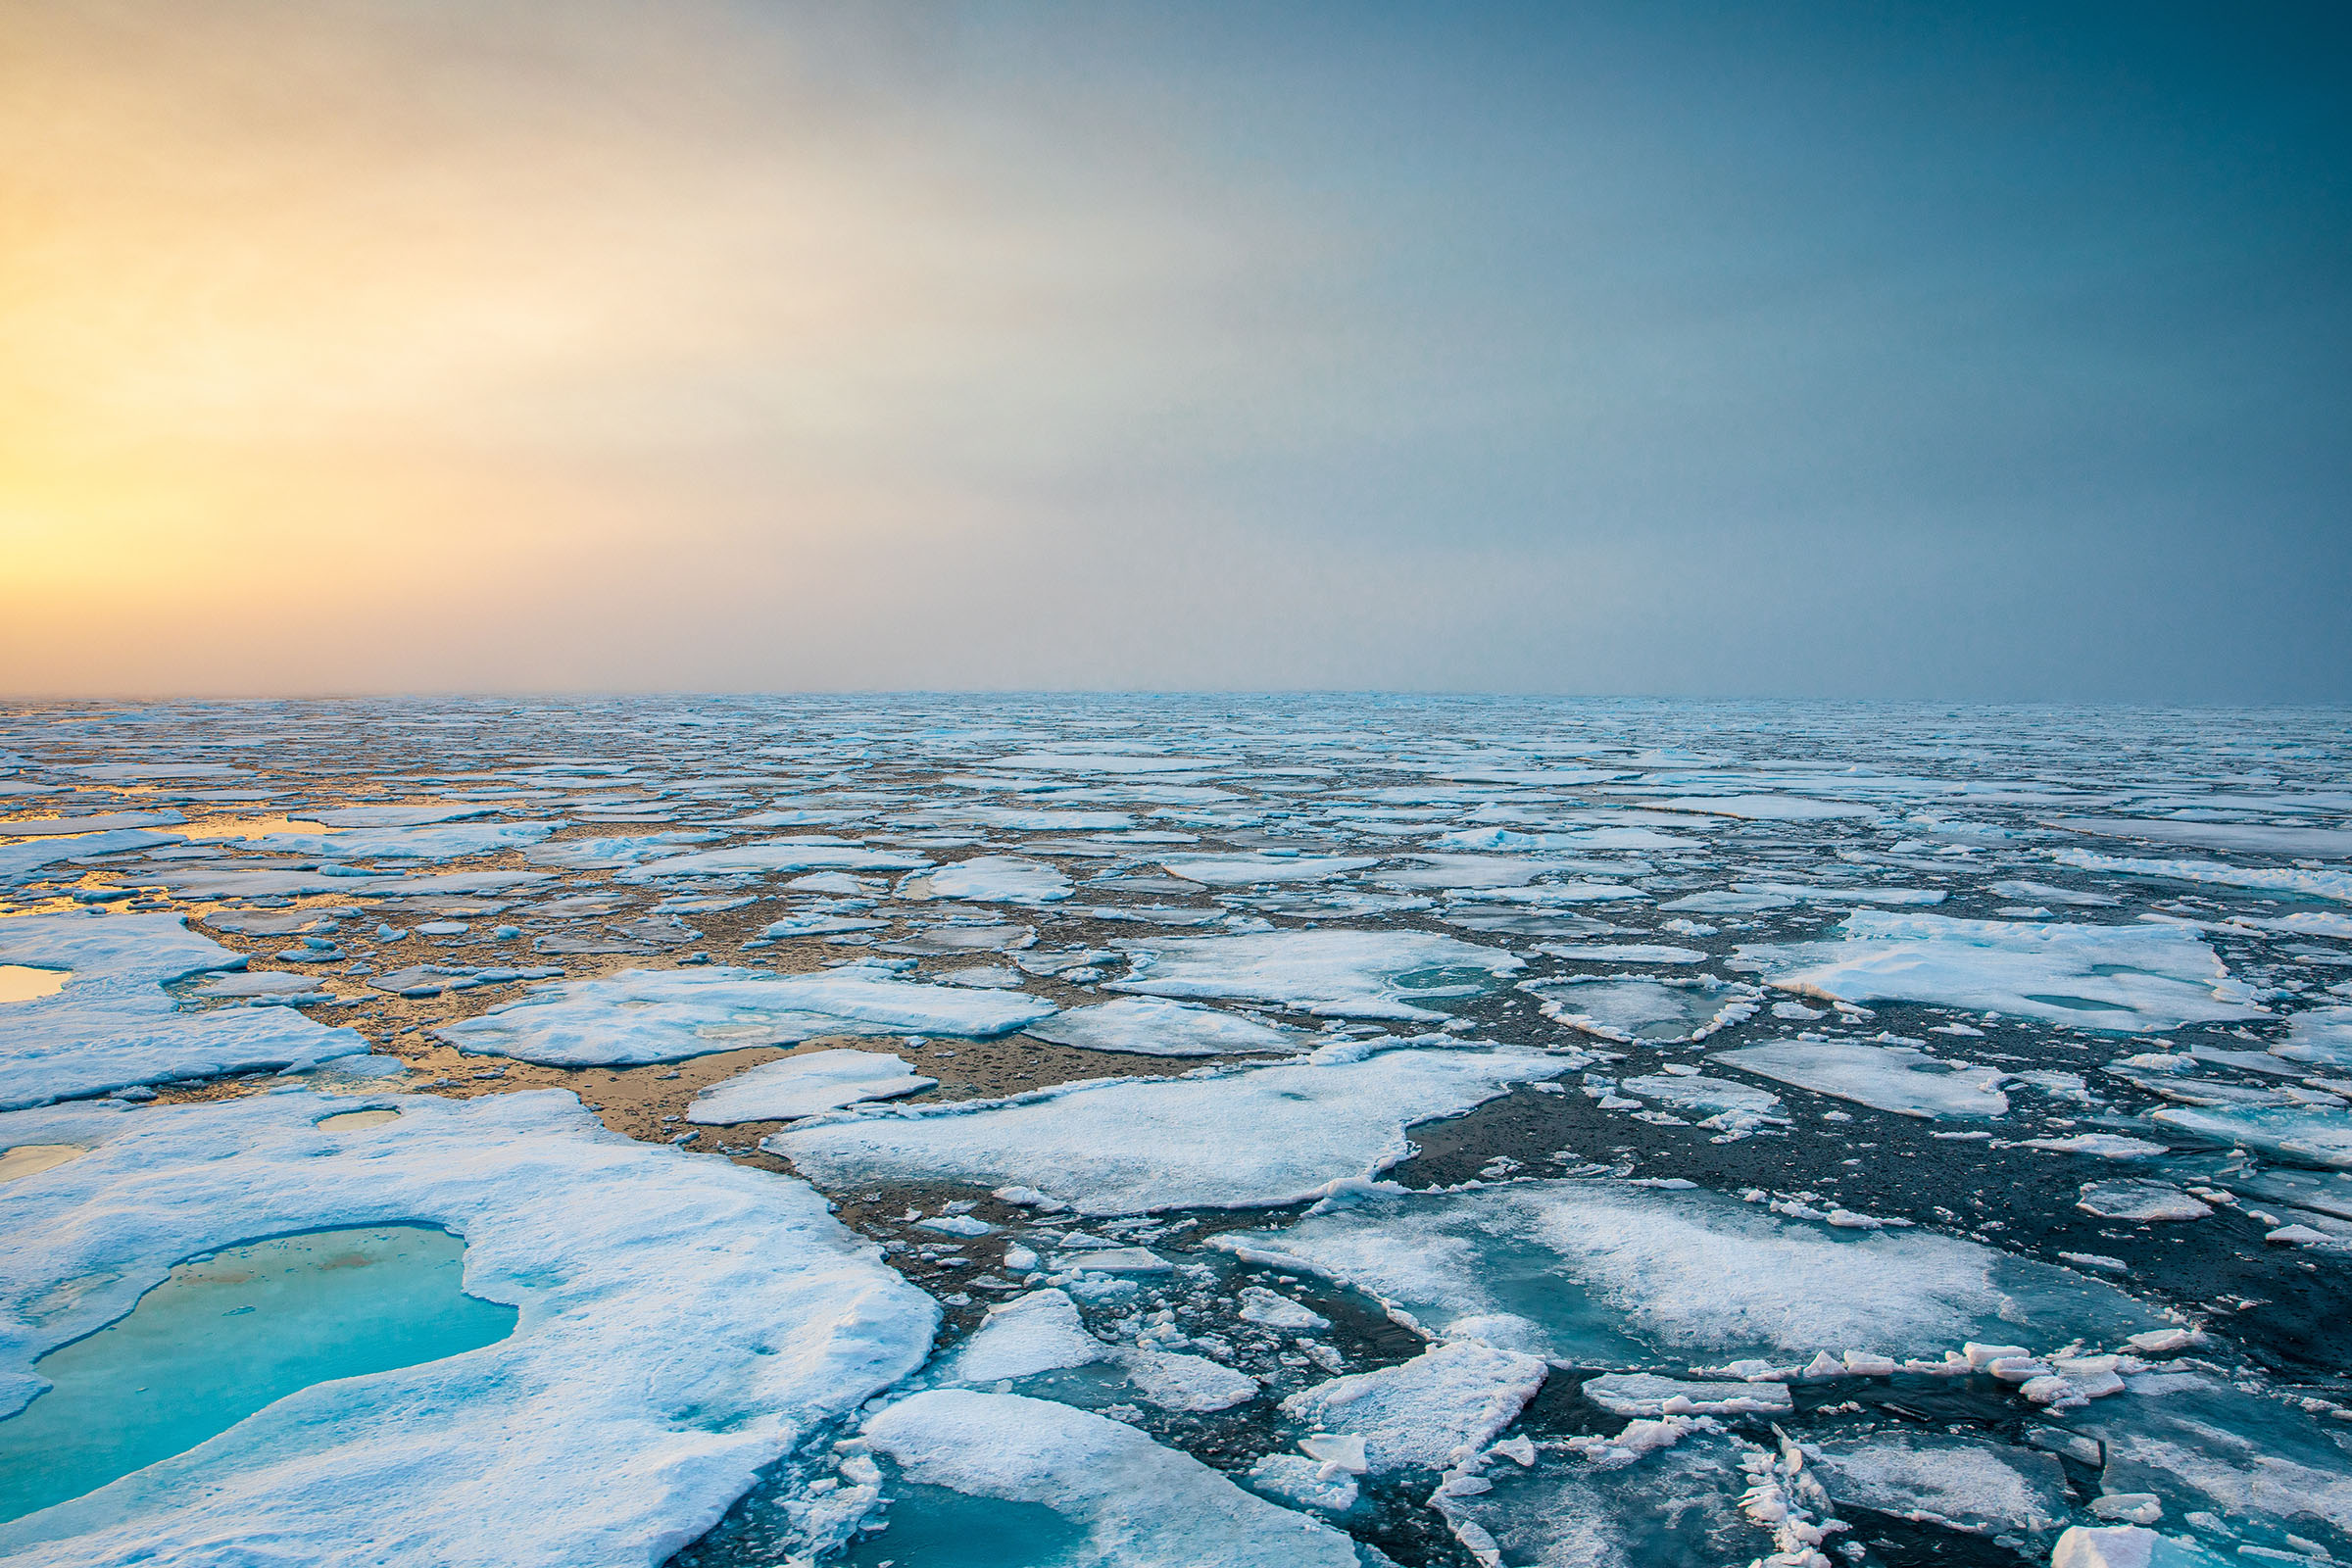 Ледовитый океан видео. Северный Ледовитый океан паковый лед. Северный Ледовитый океан летом. Арктический океан. Озера бассейна Северного Ледовитого океана.